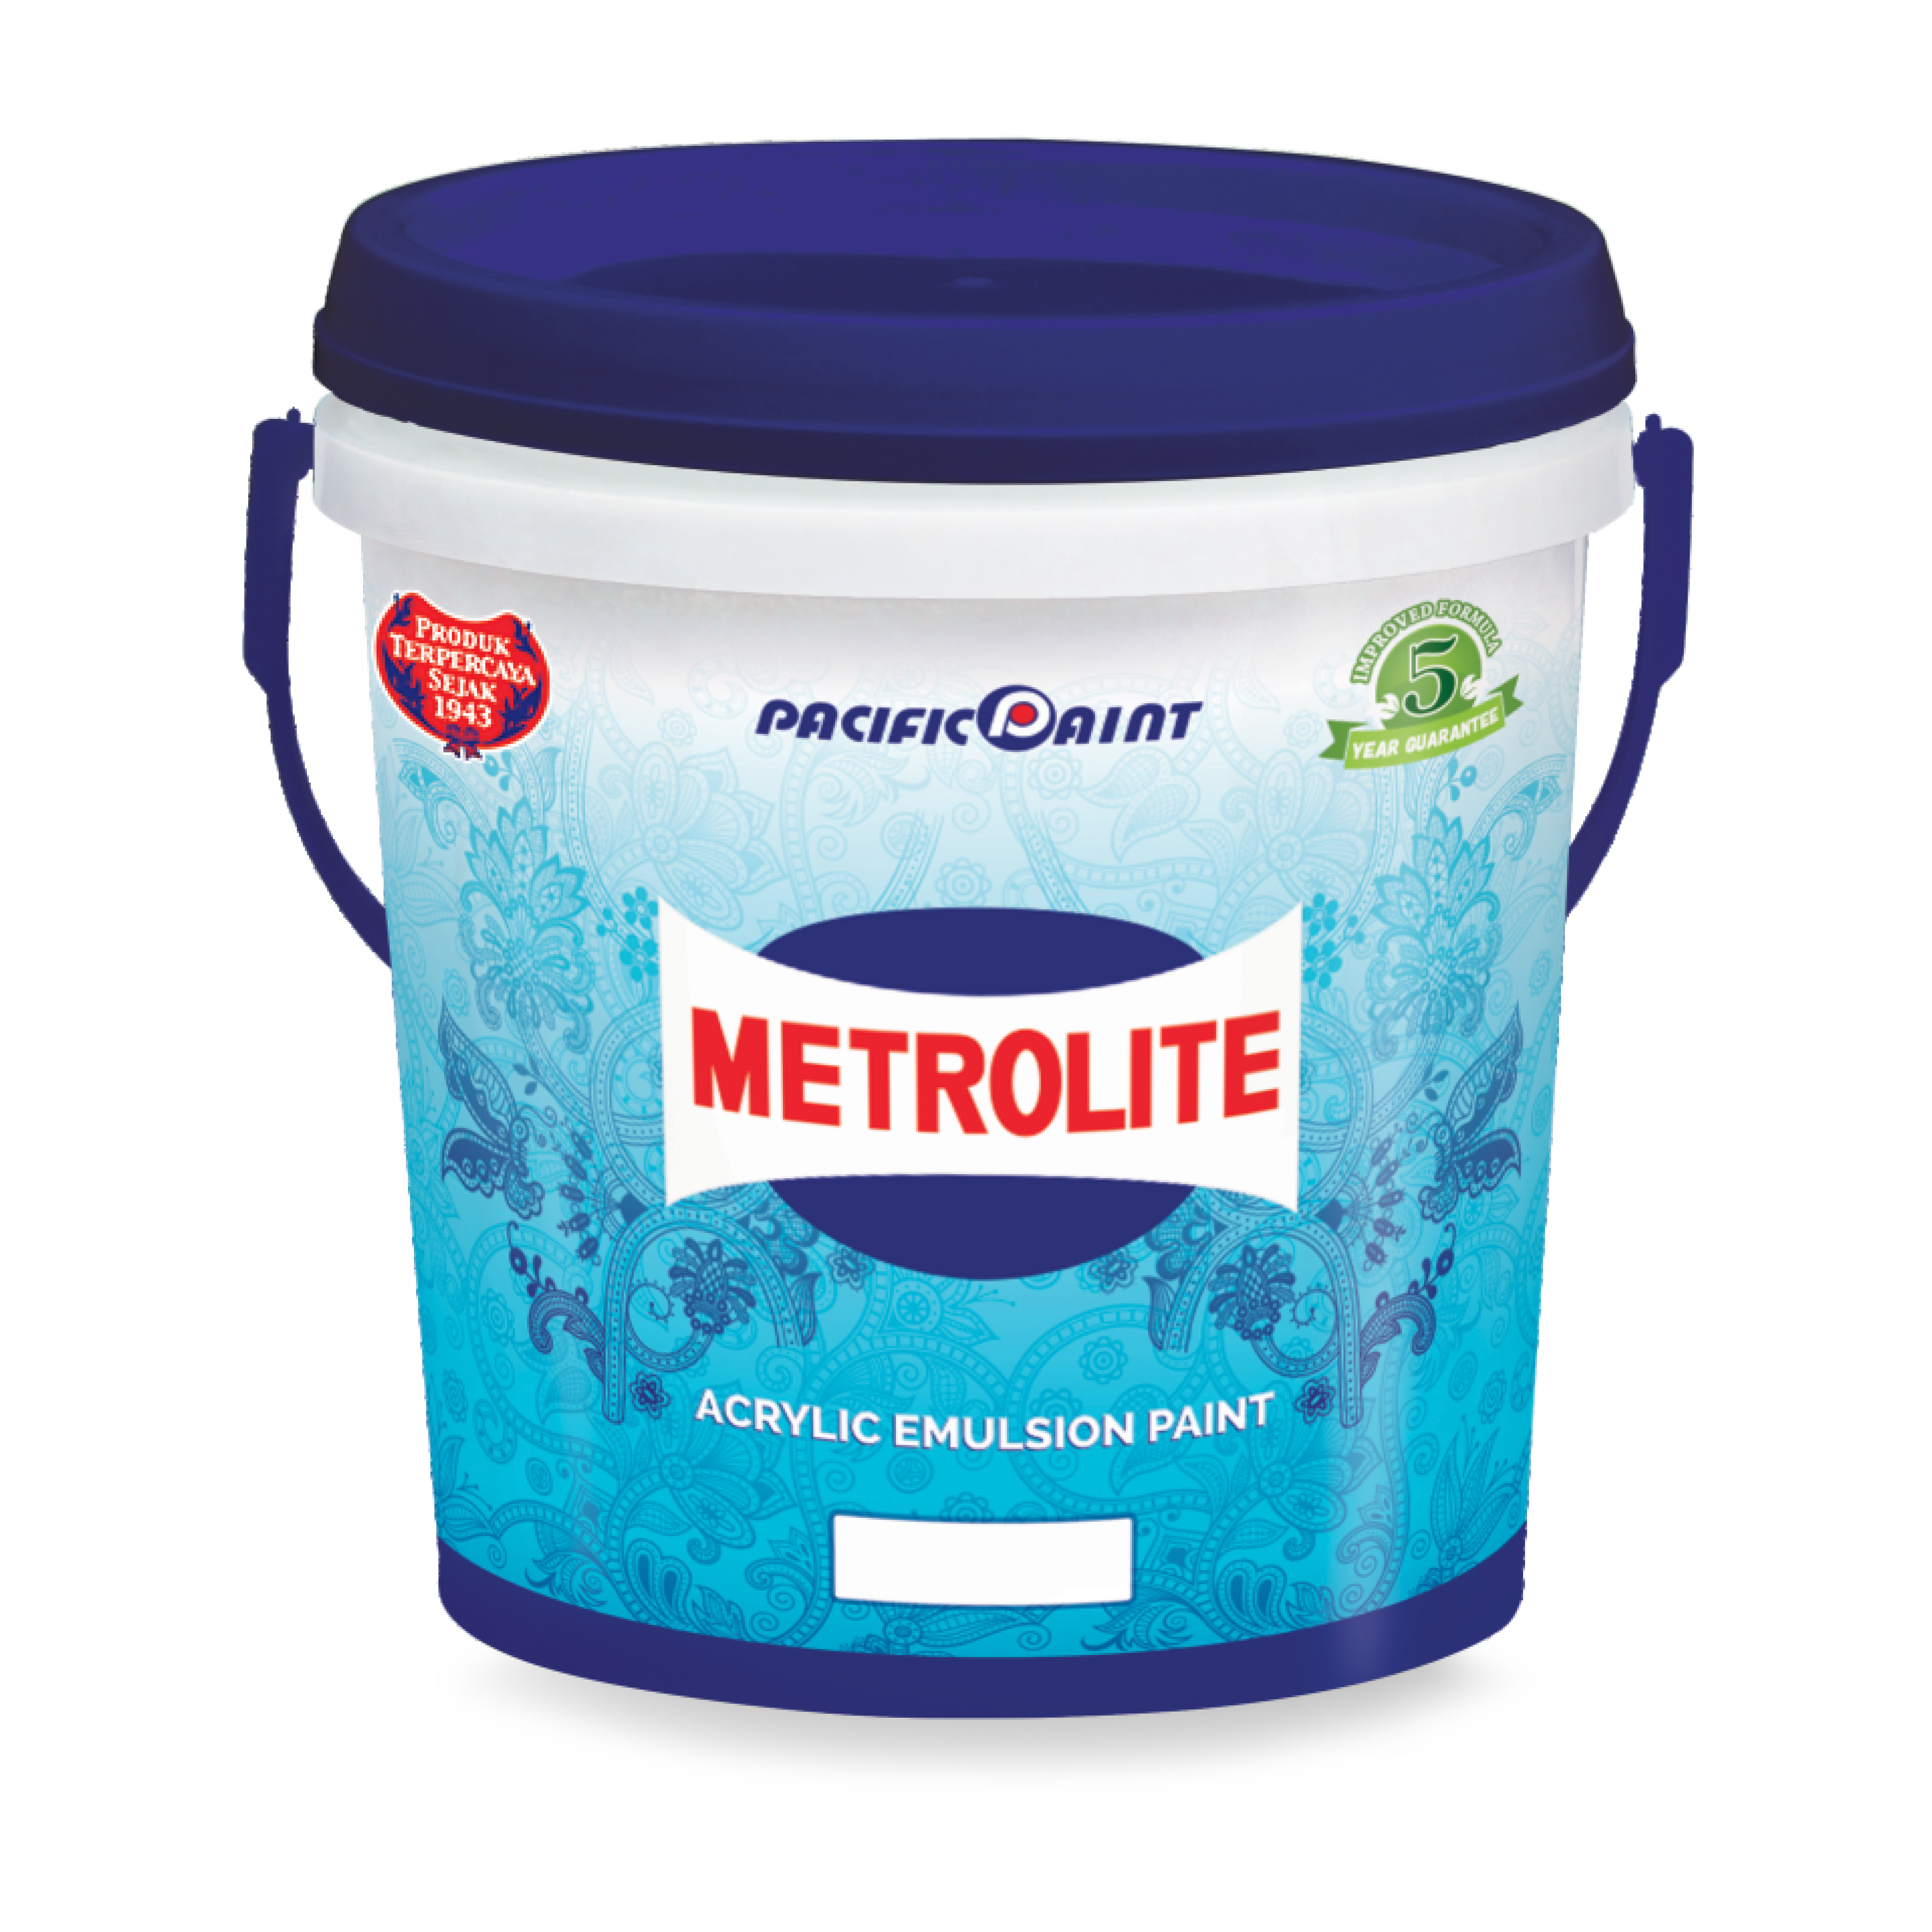 Metrolite Acrylic Emulsion